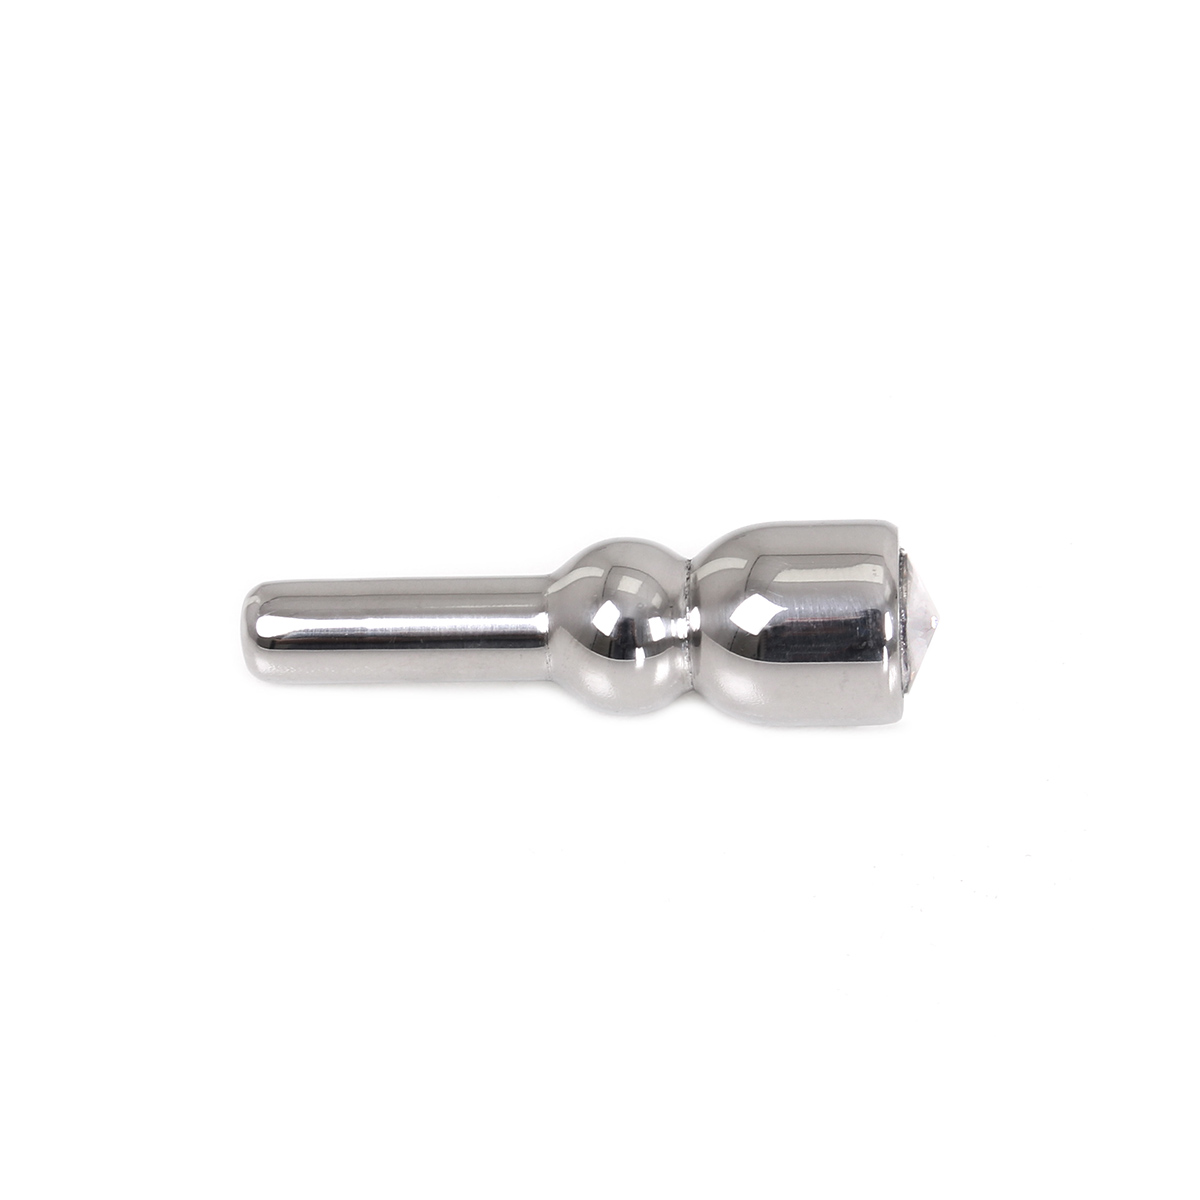 The-Bead-Mini-with-Jewel-Plug-OPR-2960089-2